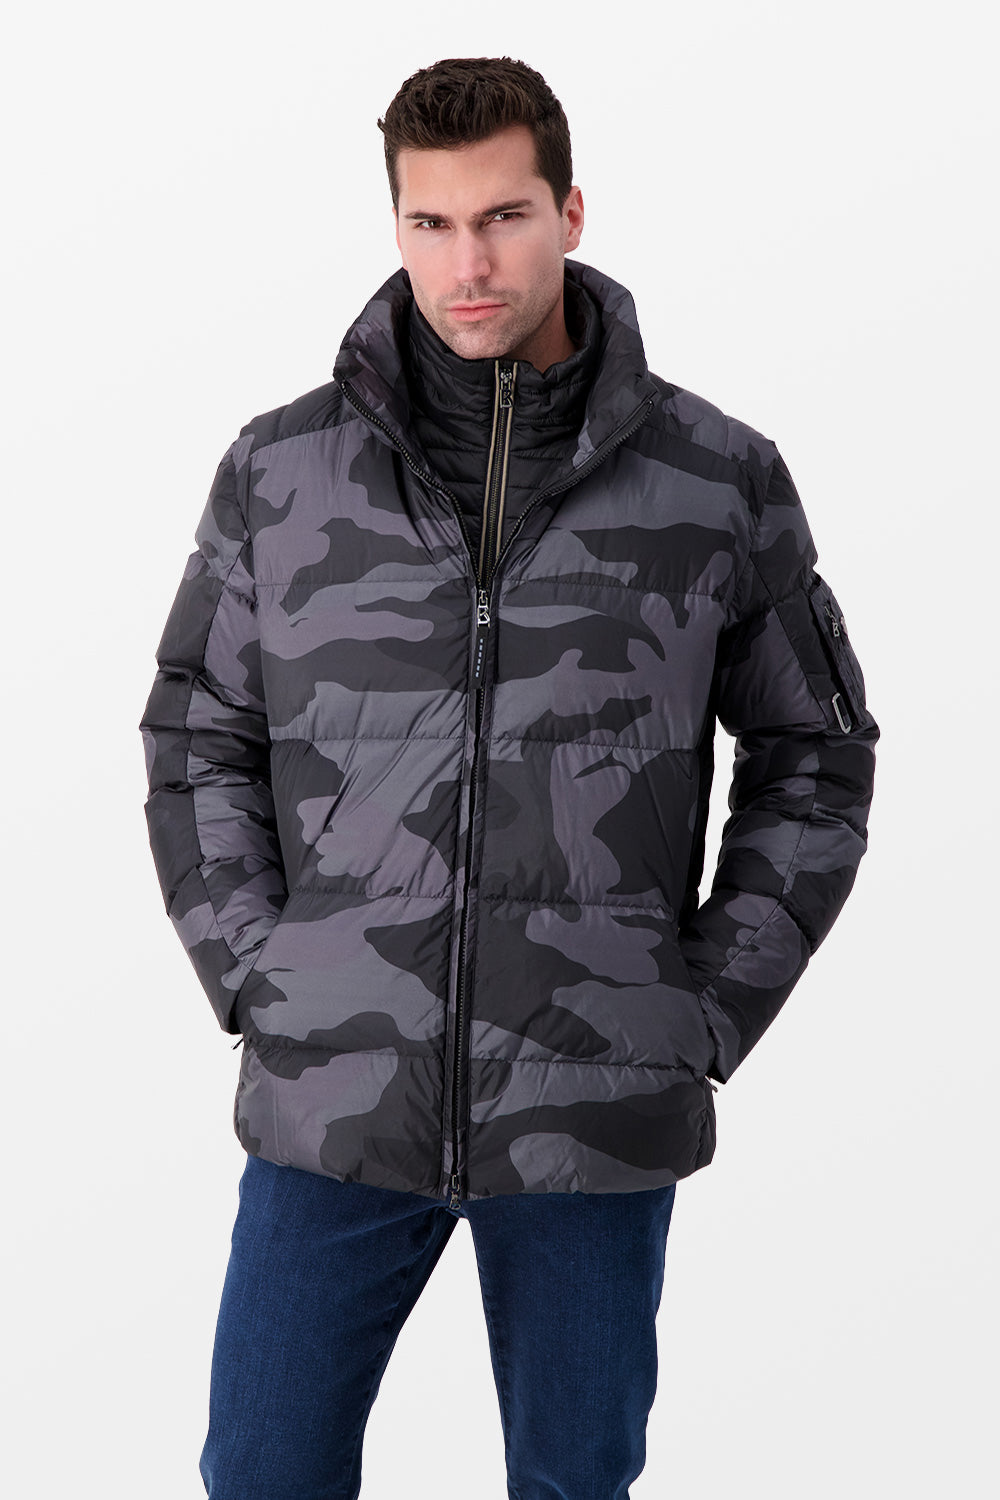 Bogner Army Grey Down Jacket